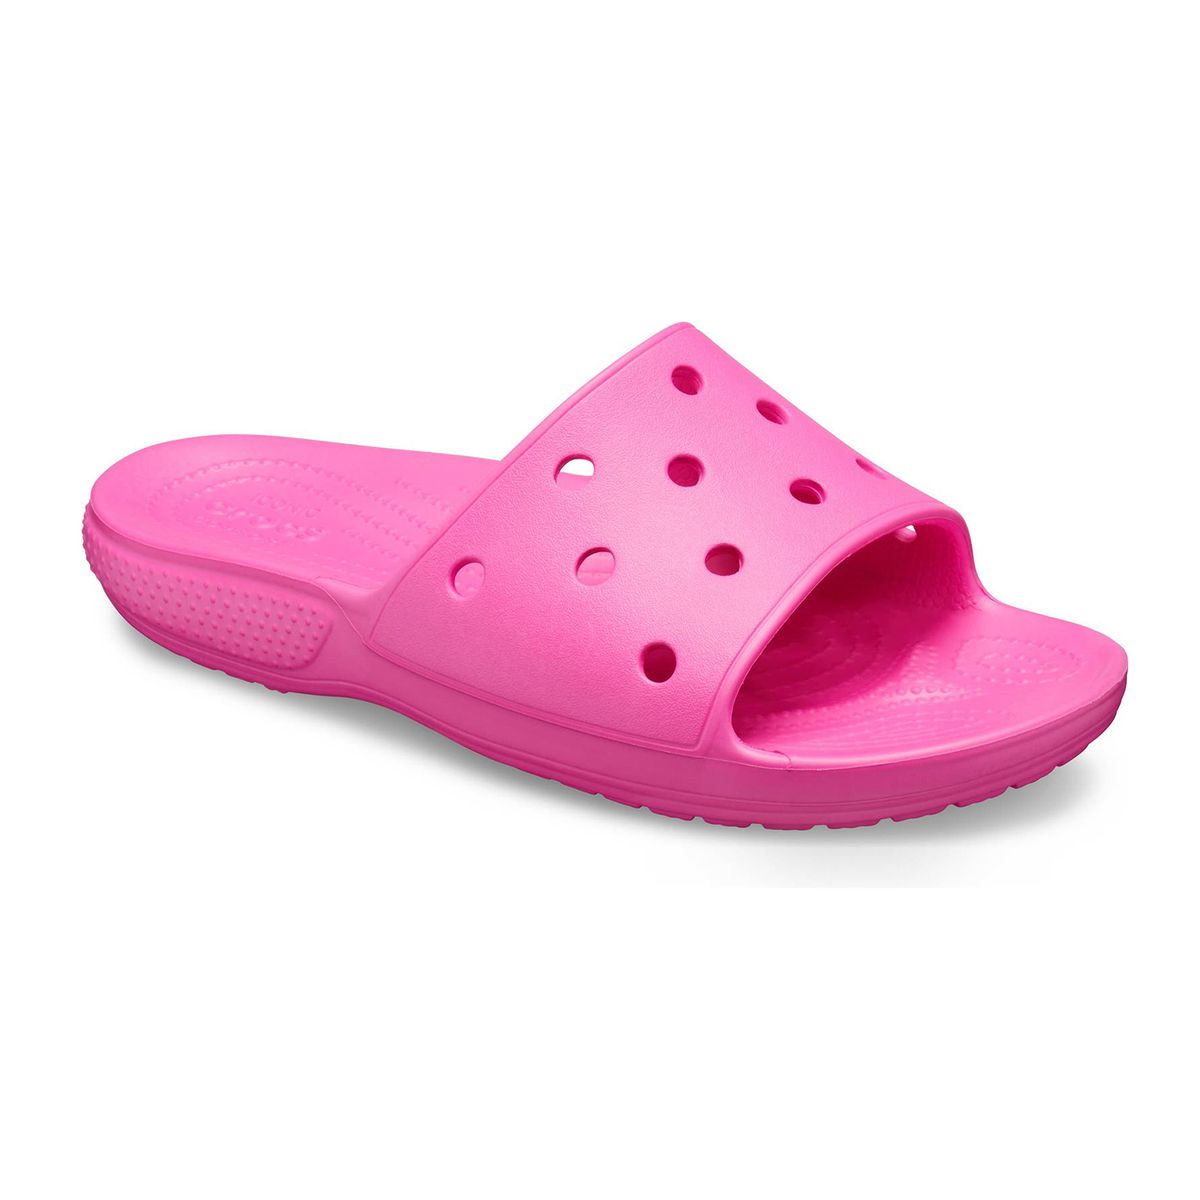 Crocs Classic Slide Sandal in Pink